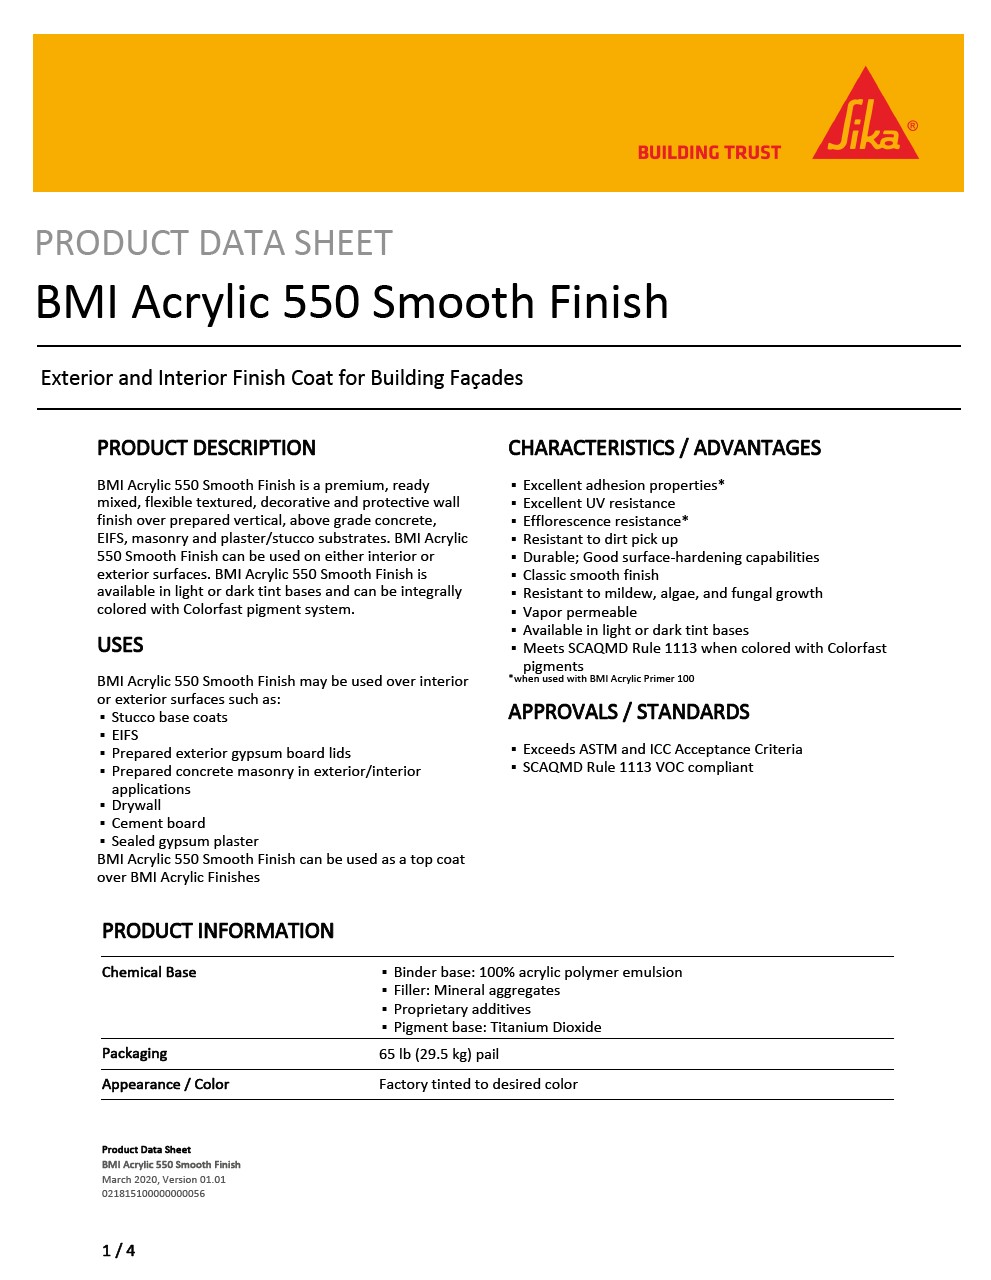 BMI Acrylic 550 Smooth Finish